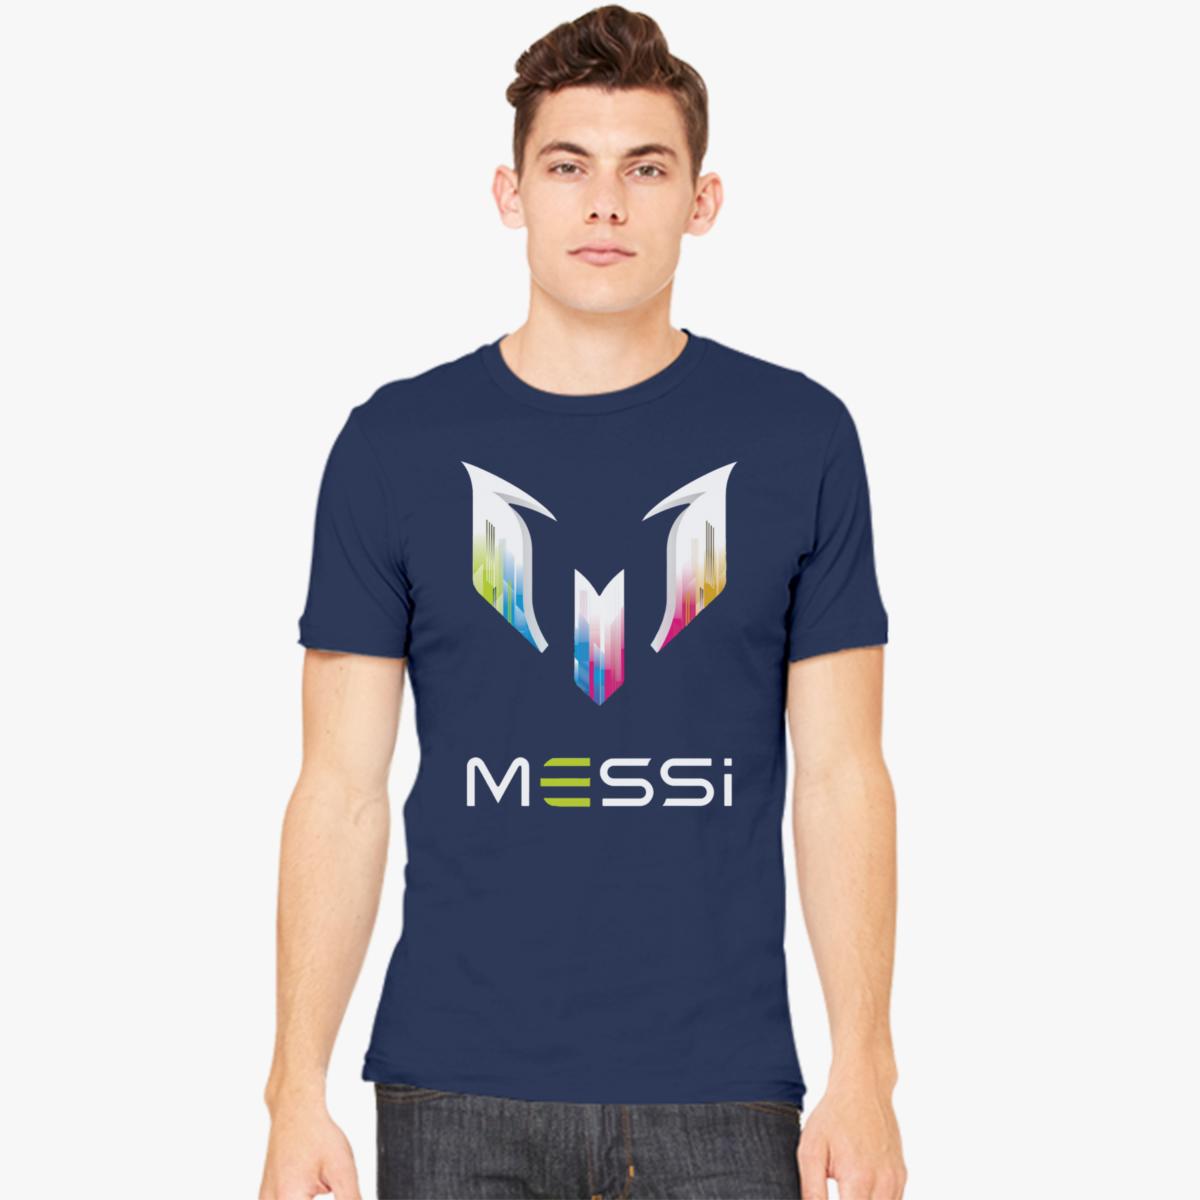 Messi Men's T-shirt